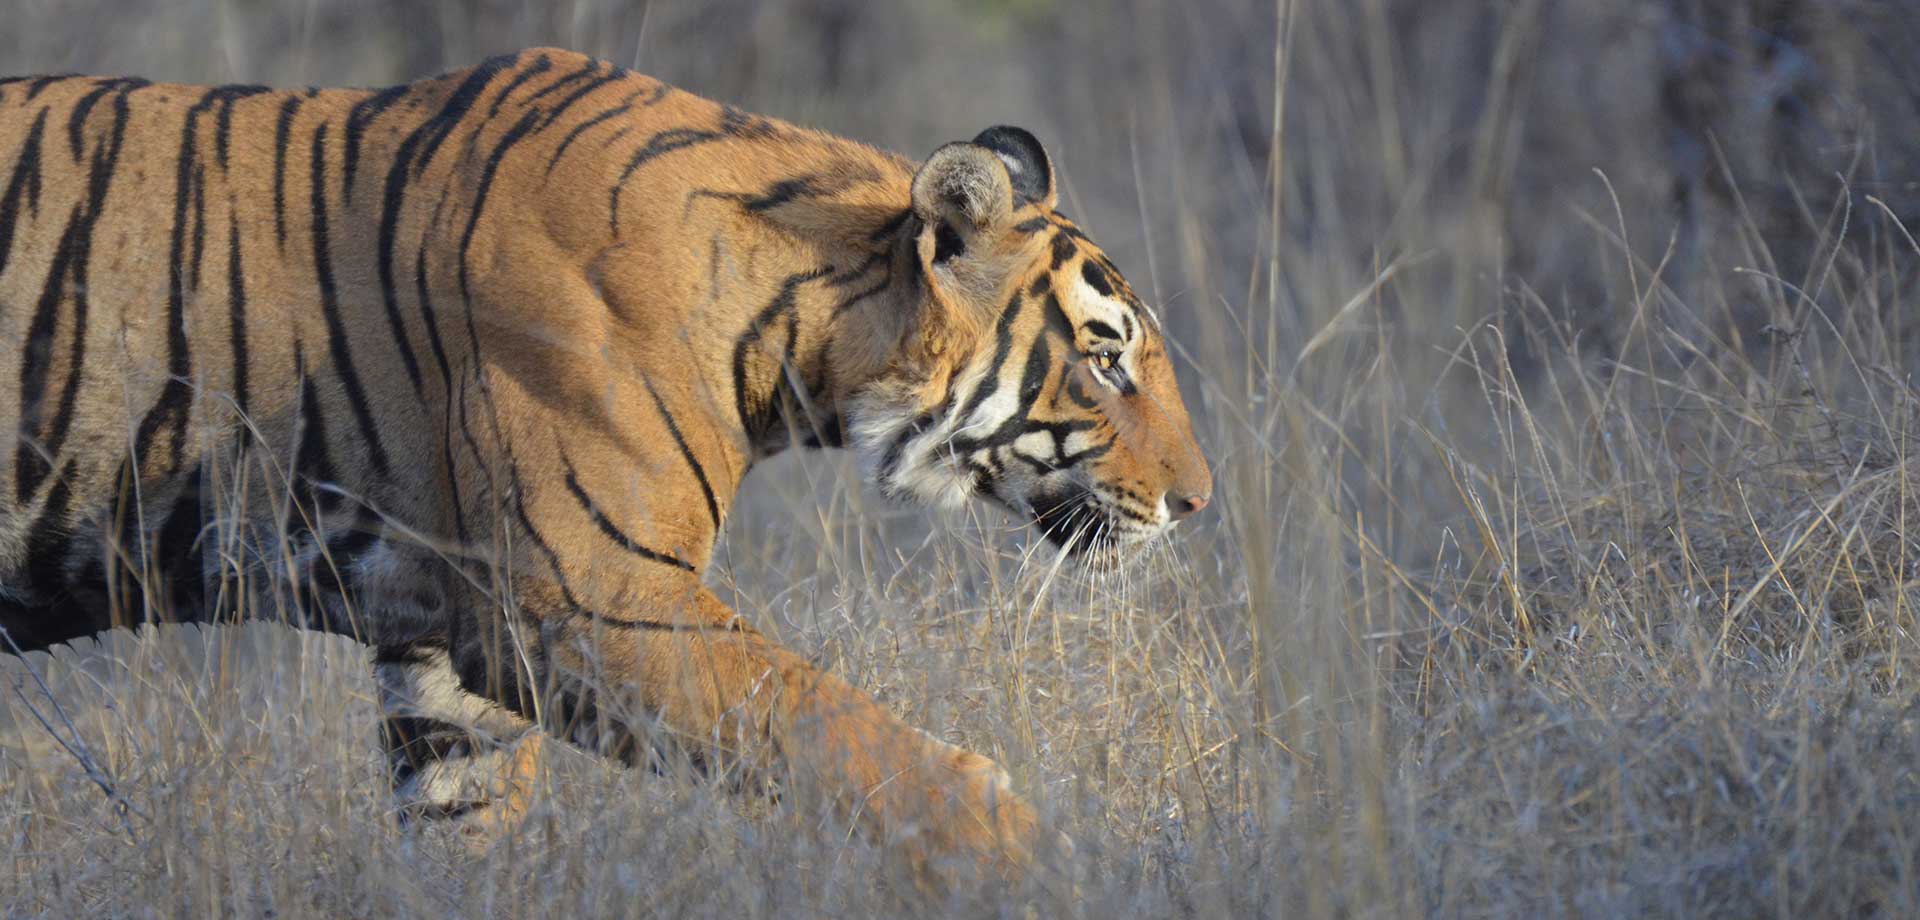 Contact - Tiger Safari Tours in India